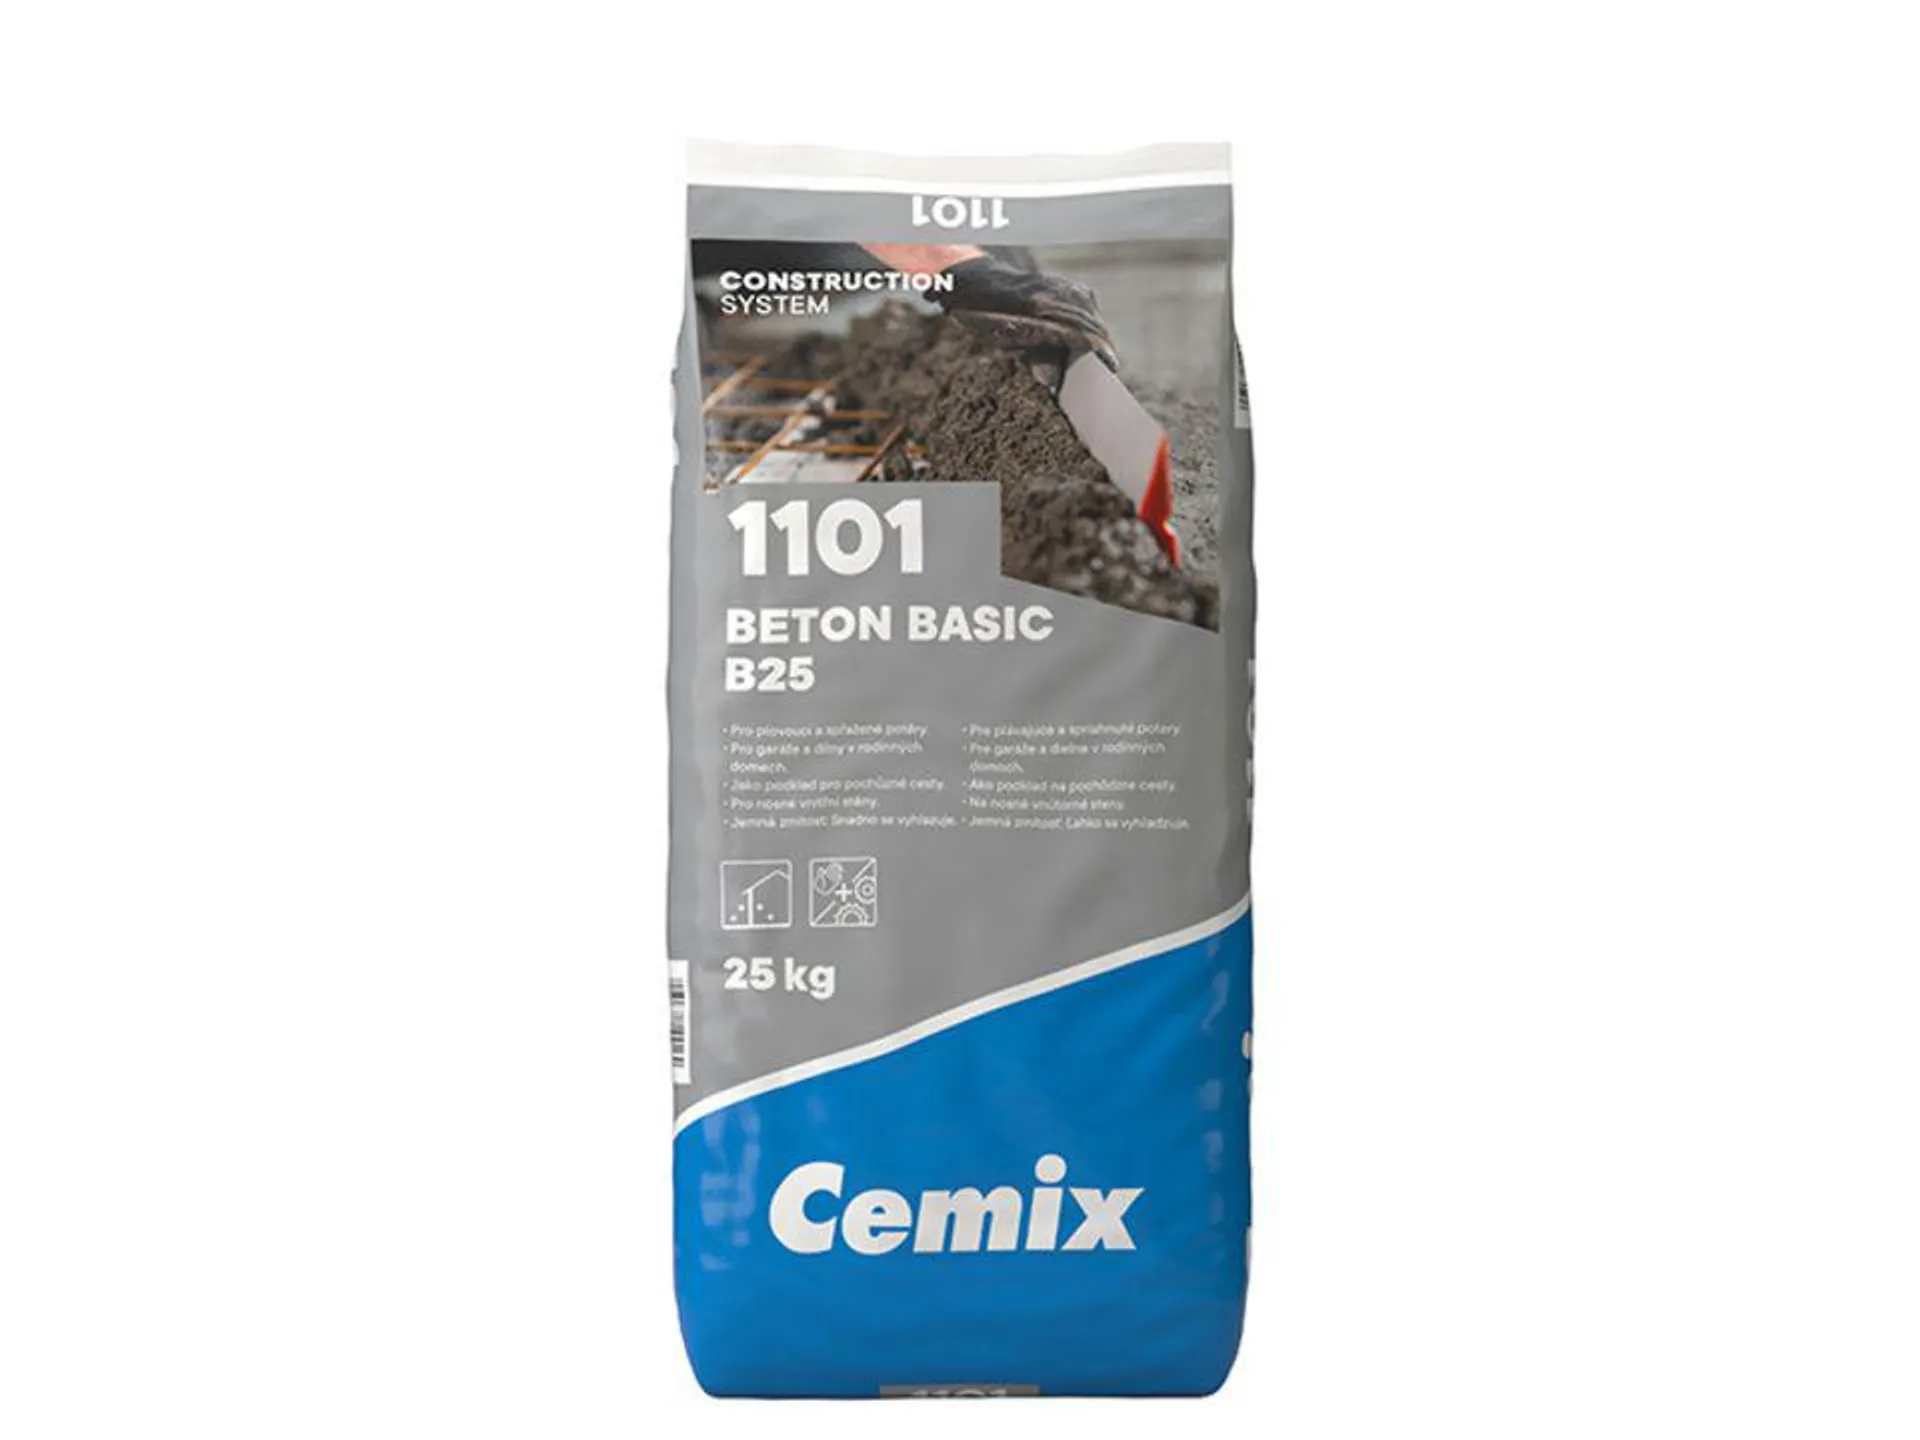 Cemix Beton Basic B25 25kg